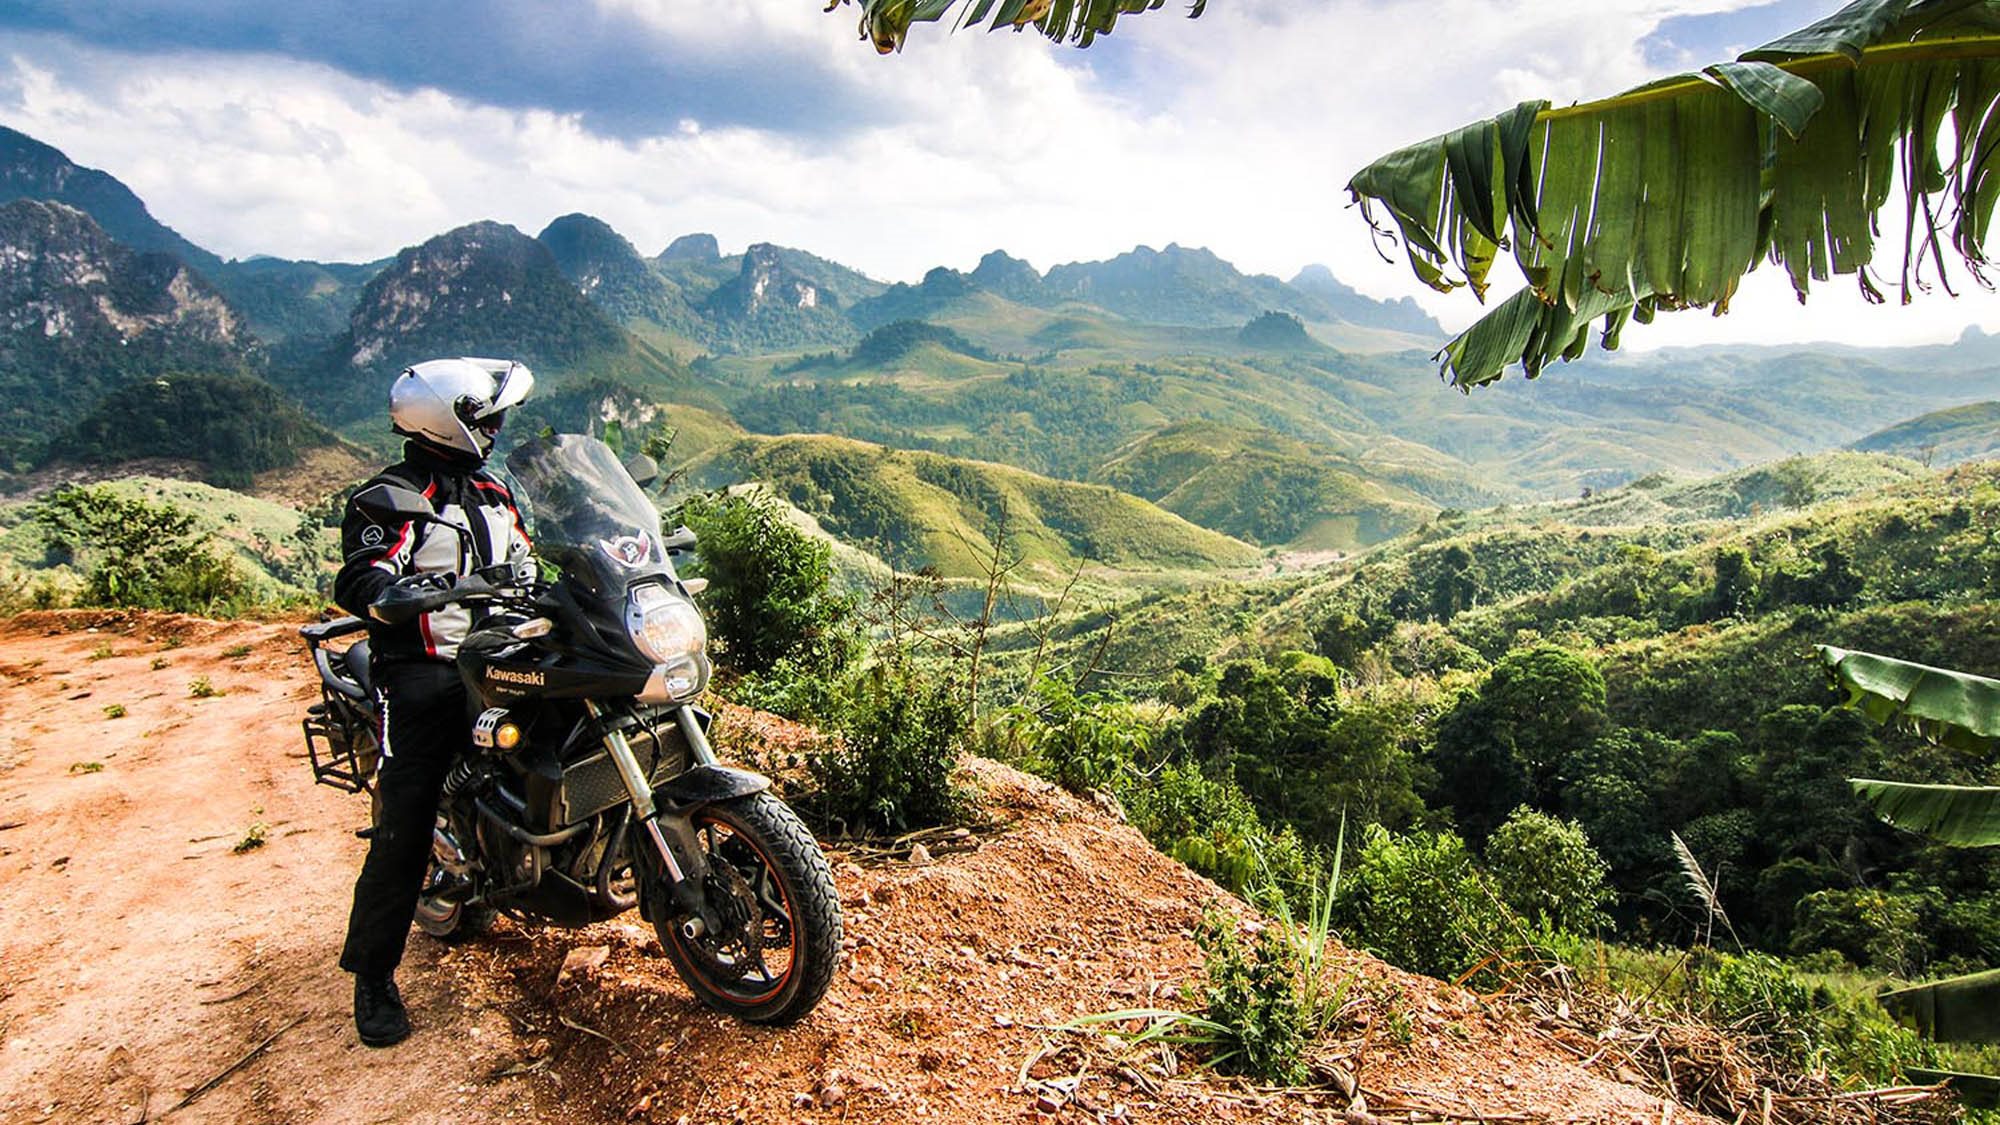 Asia touring. Мотоциклы Азии. Мото в Азии. Азия мотоцикл природа. Мотоциклисты в Азии.